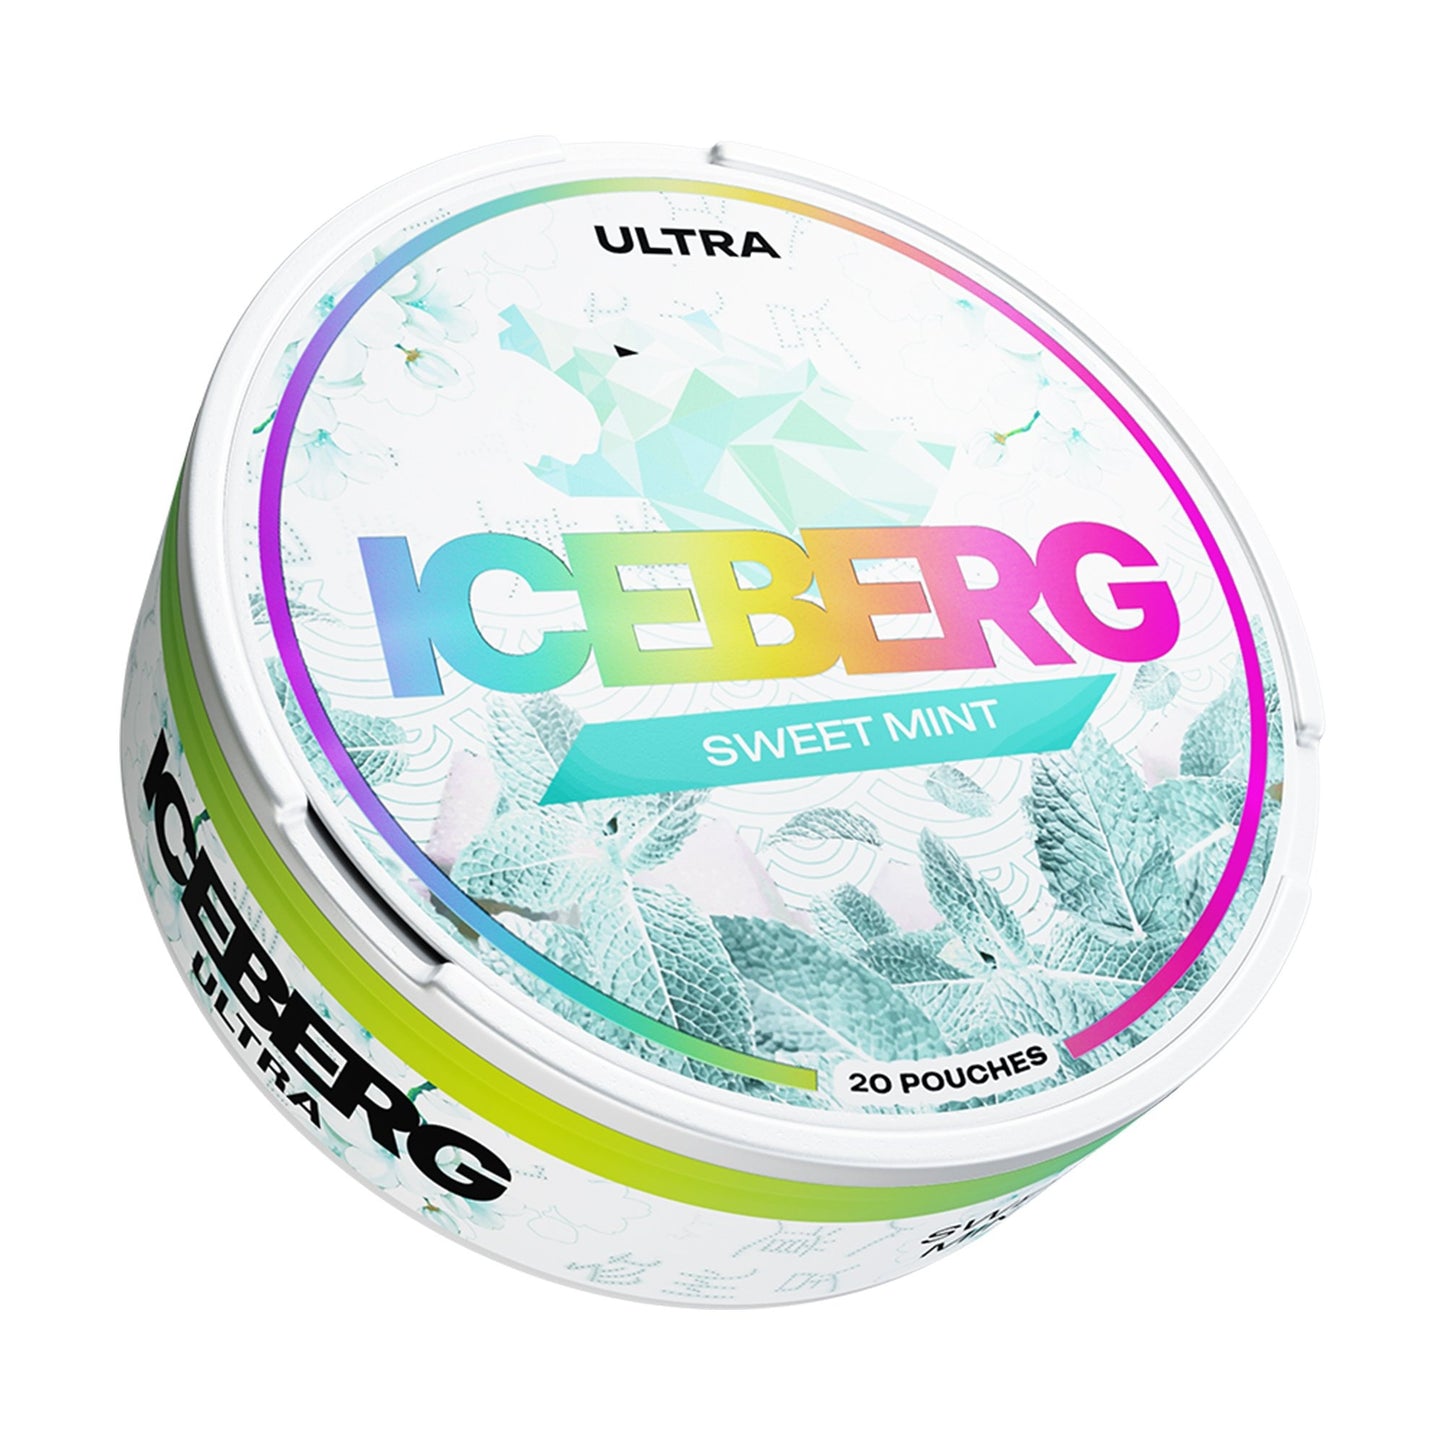 Iceberg Sweet Mint - 150mg